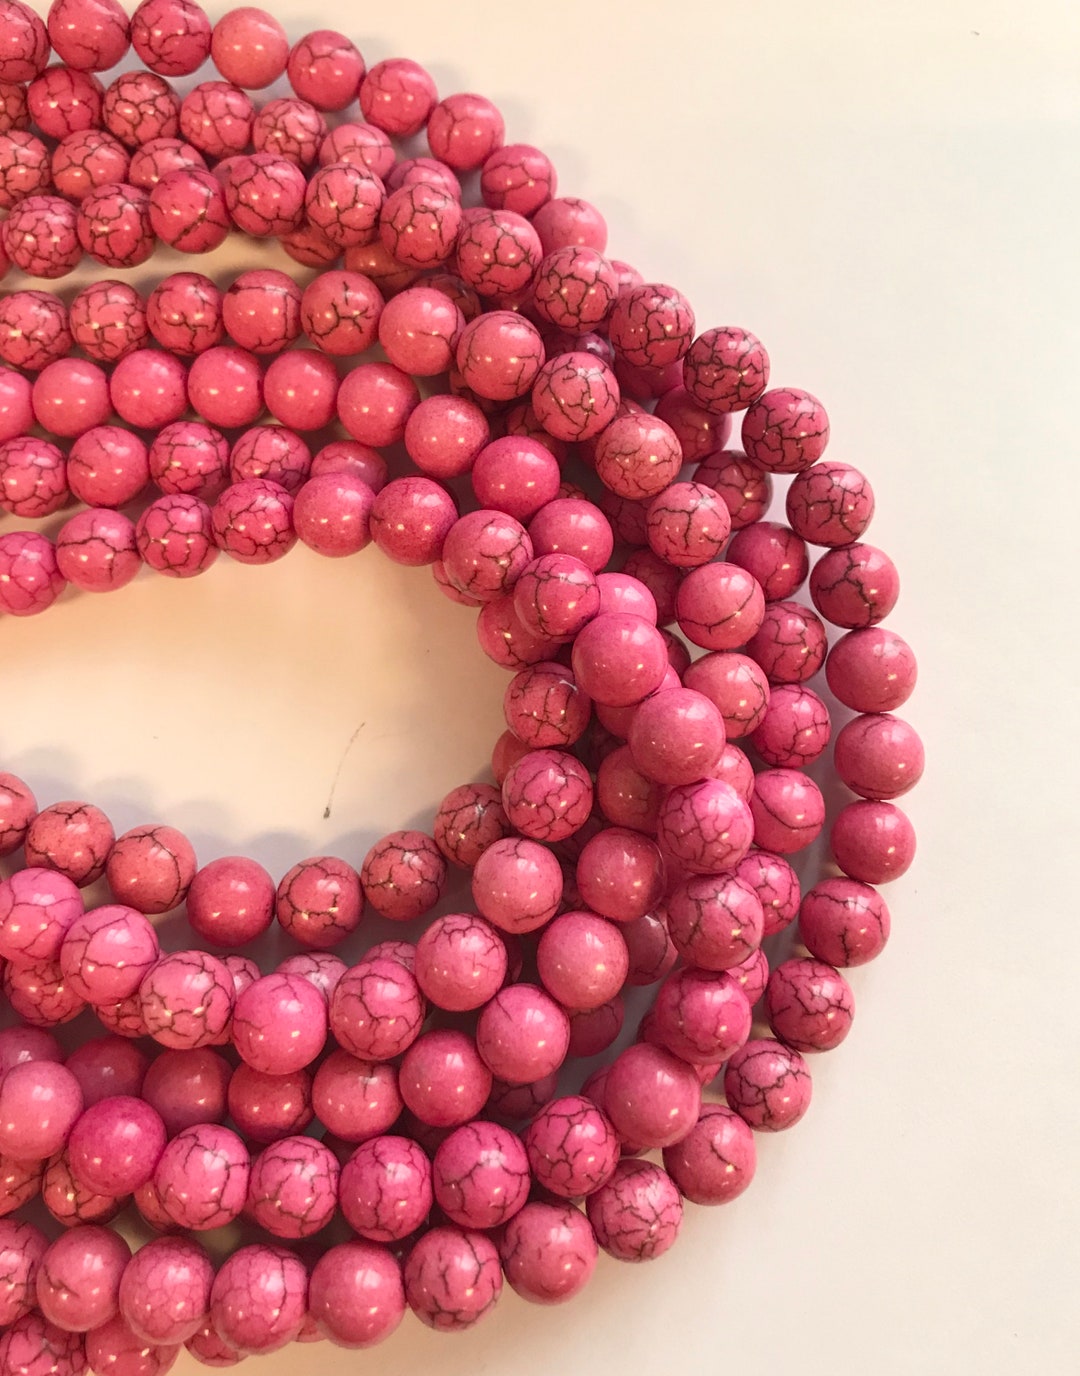 6mm Agate Beads Gemstone Brown Orange Beige (12 beads) Stone Beads Natural  Round Smooth Gemstone Beads Beading Jewelry Making (129)